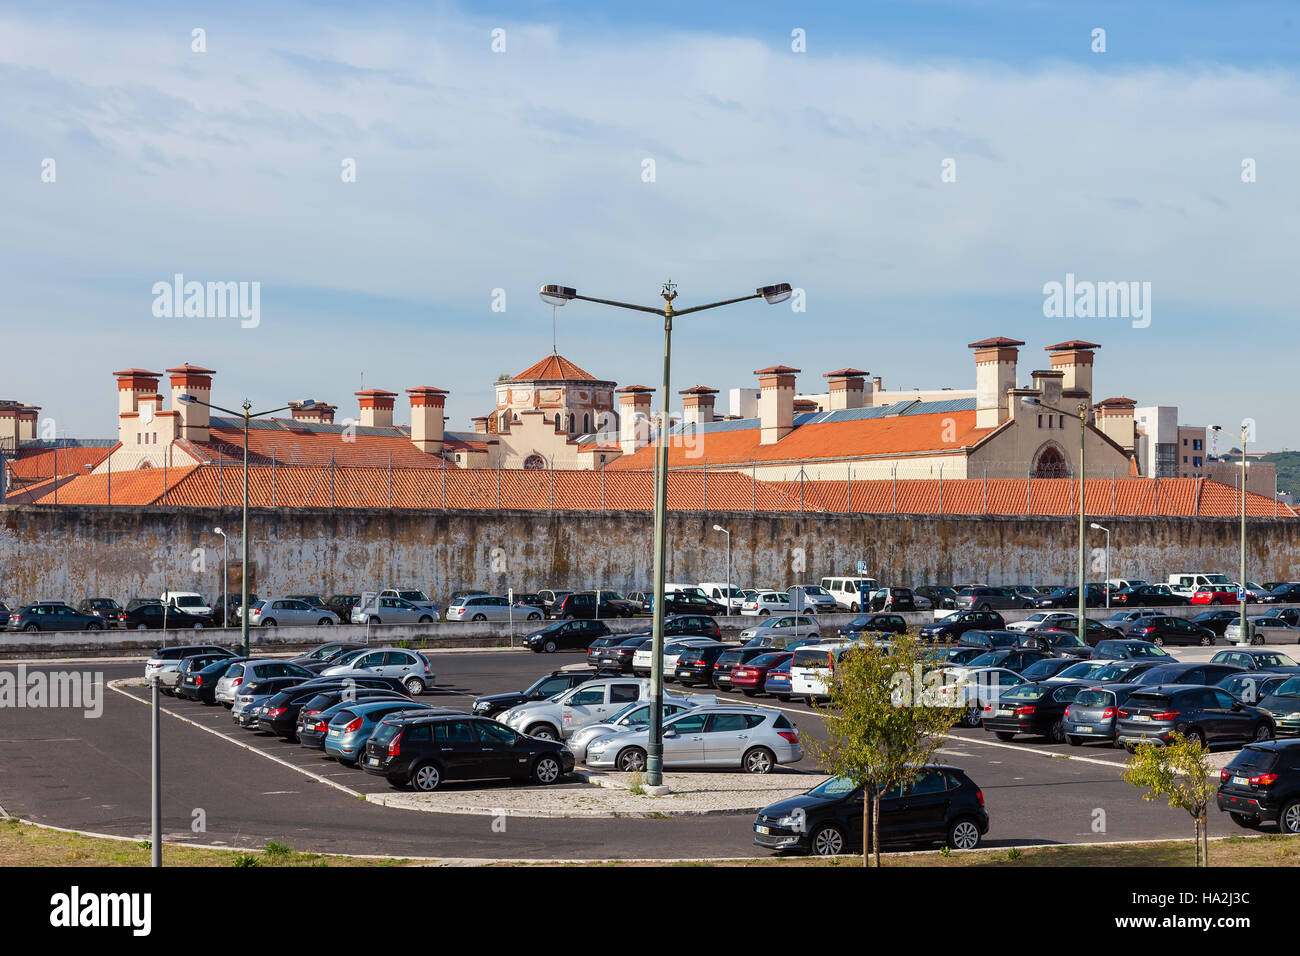 Lisbon, Portugal - October 19, 2016: Estabelecimento Prisional de Lisboa - The Lisbon Prison built close to the city center. Stock Photo